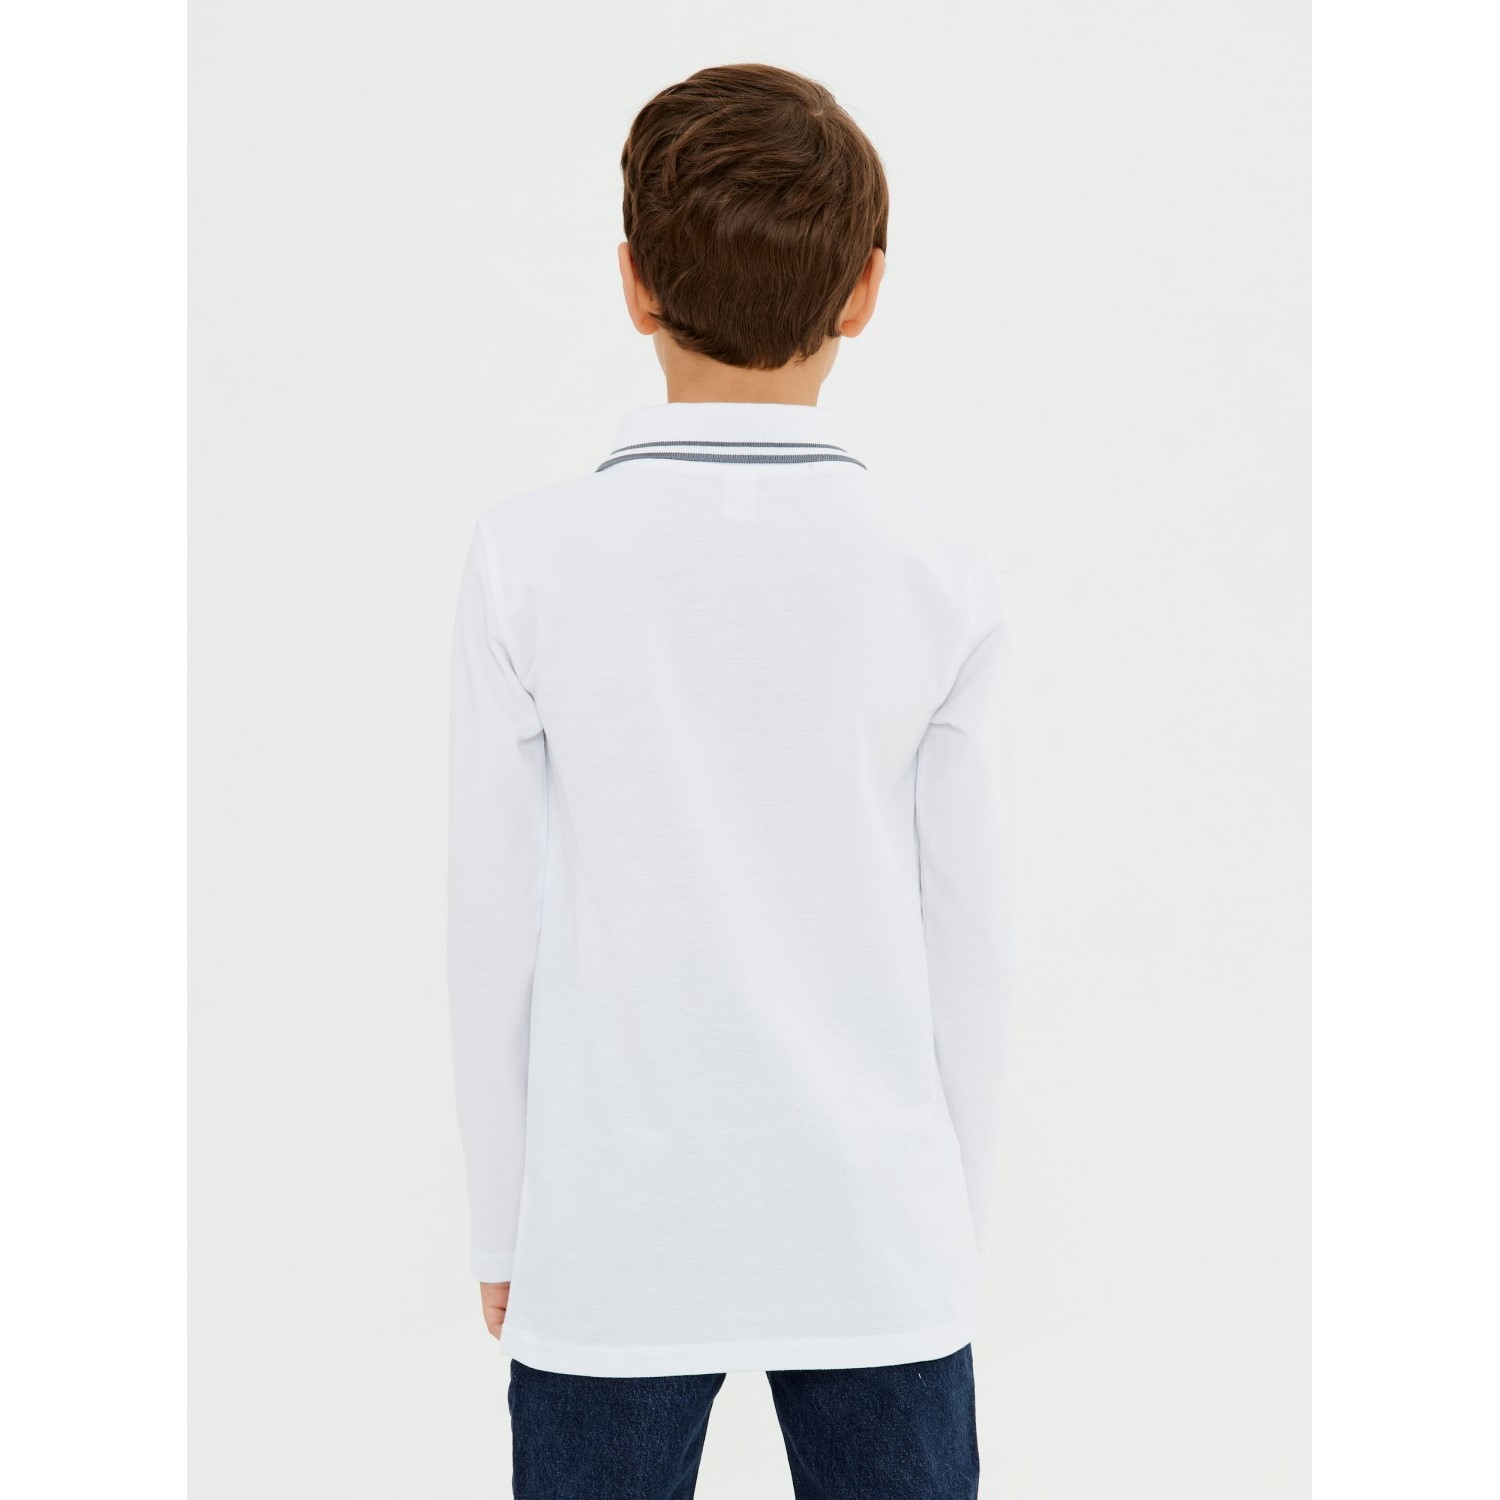 Рубашка-поло M-BABY MB-4141/белый/белый/серый - фото 6